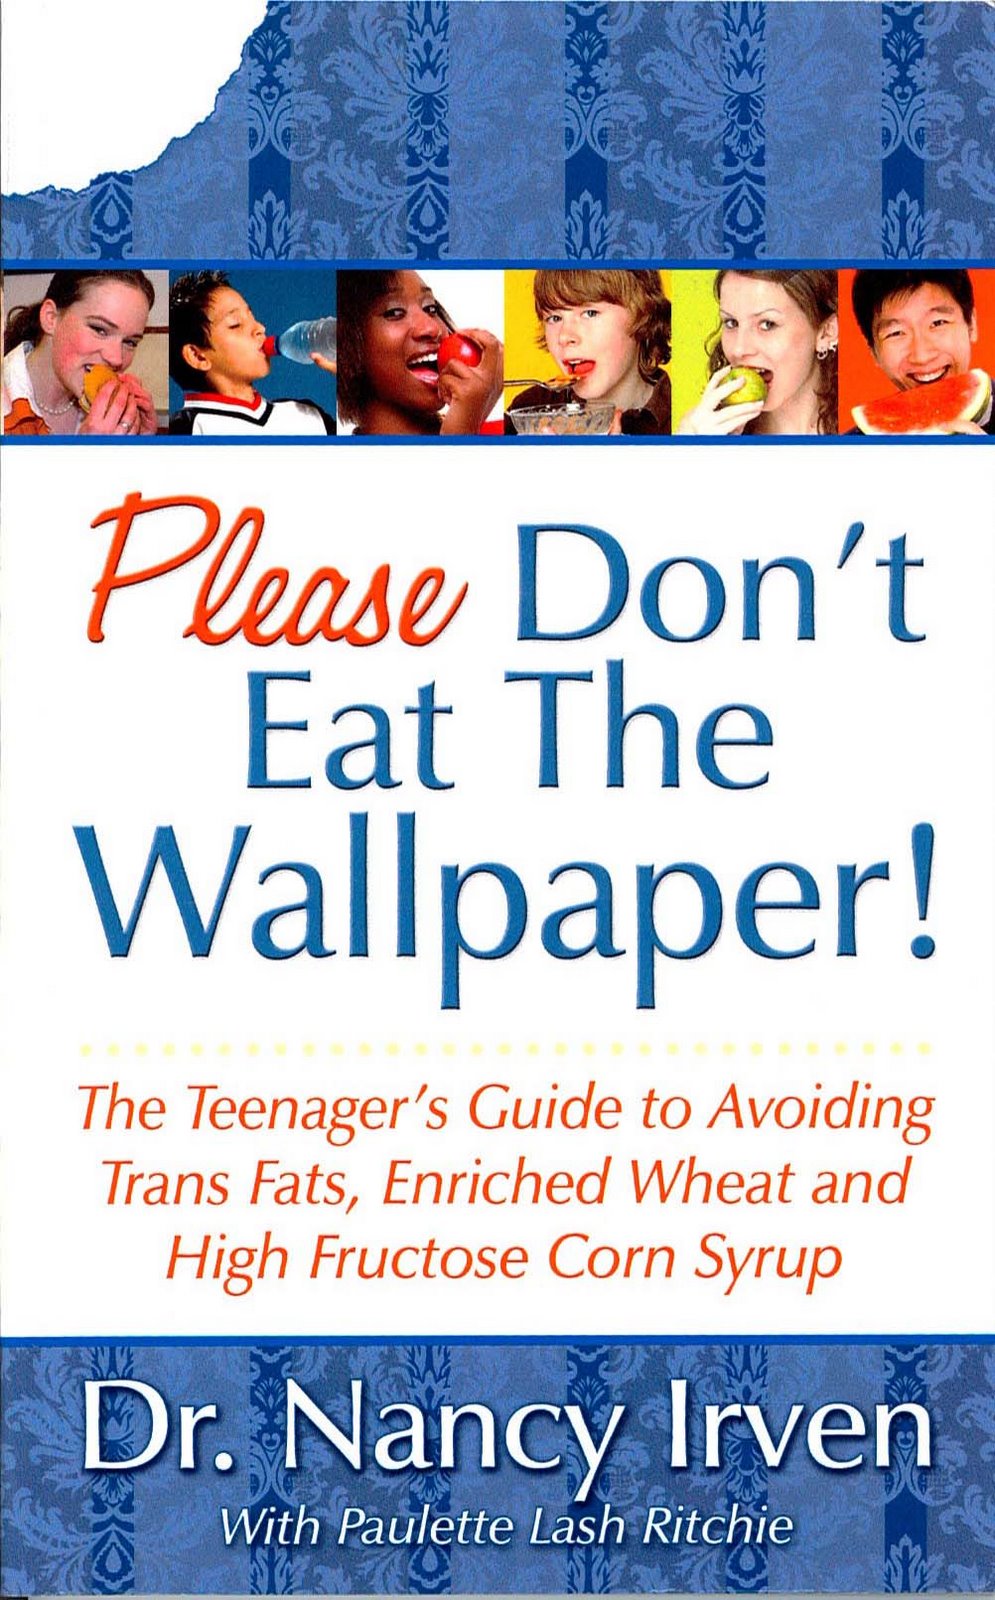 [Please+Don't+Eat+The+Wallpaper.jpg]